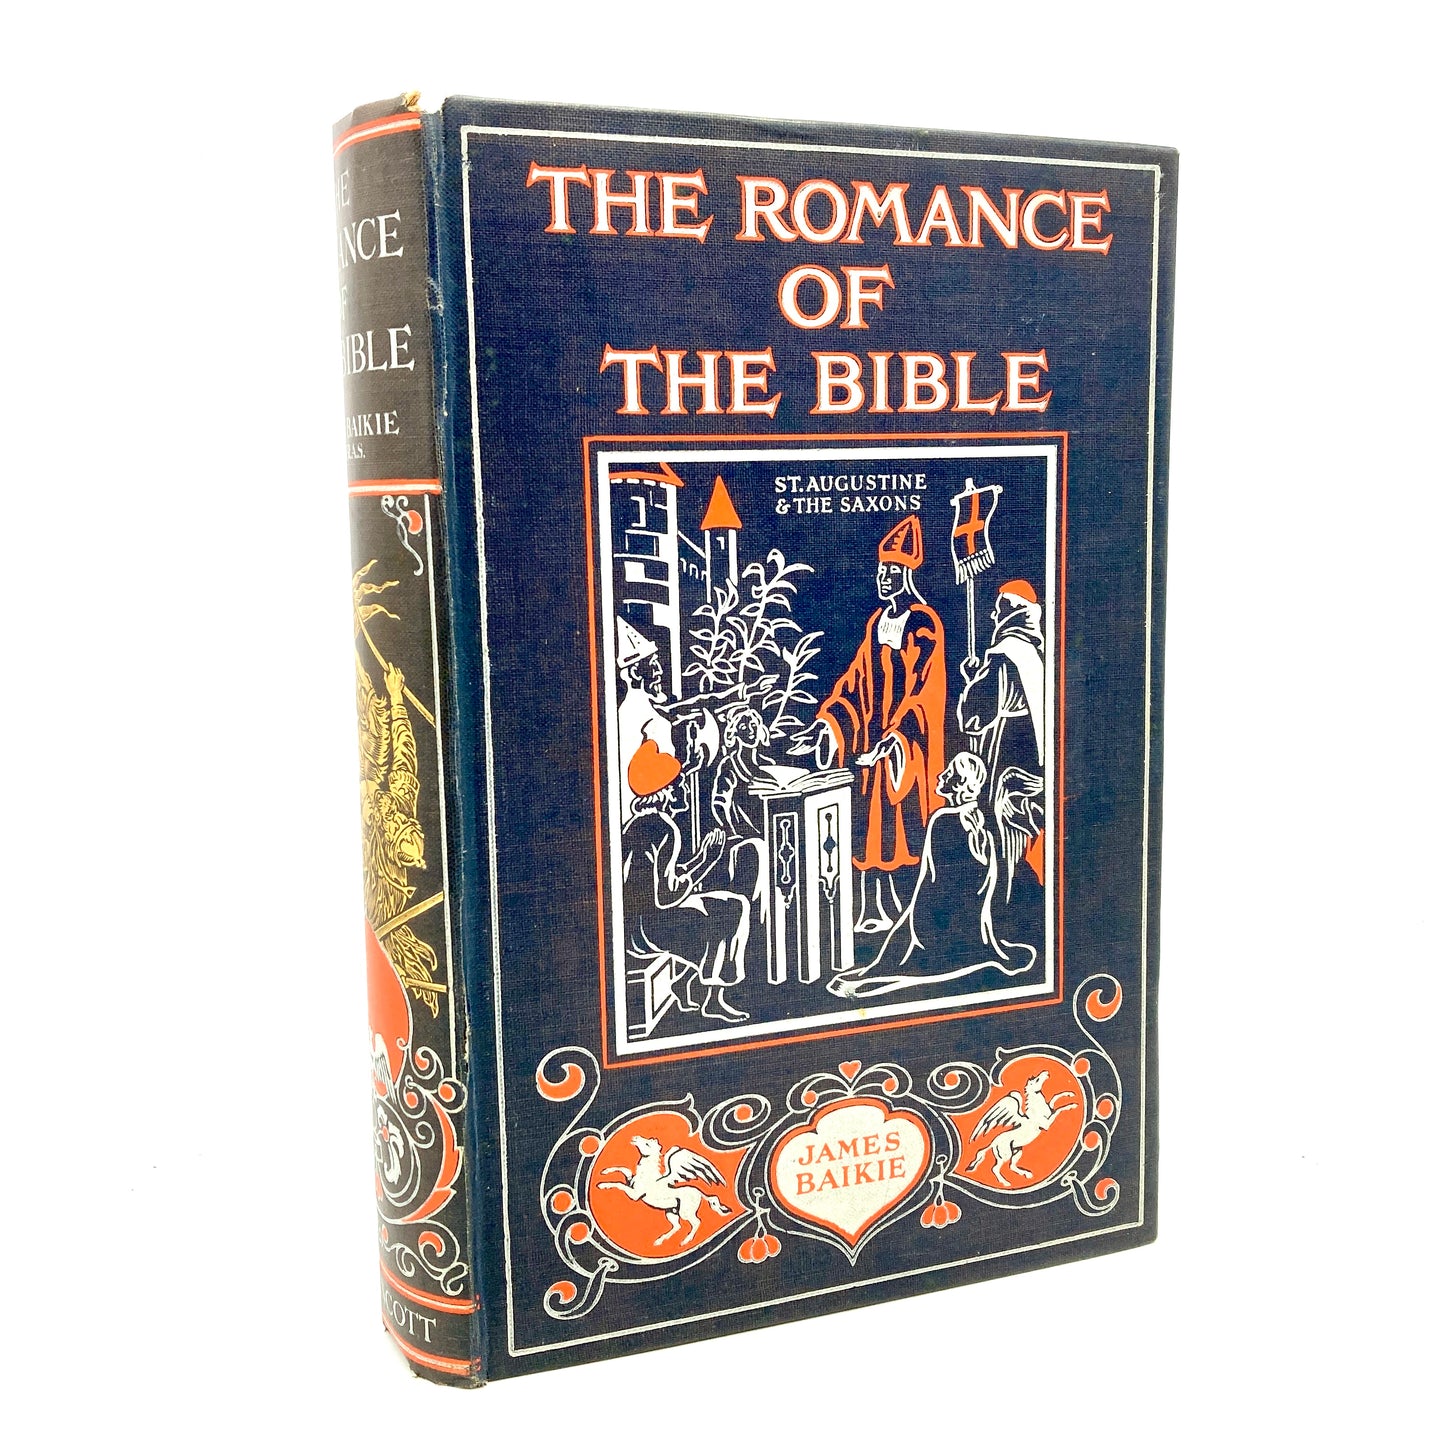 BAIKIE, James "The Romance of the Bible" [J.B. Lippincott, c1920]